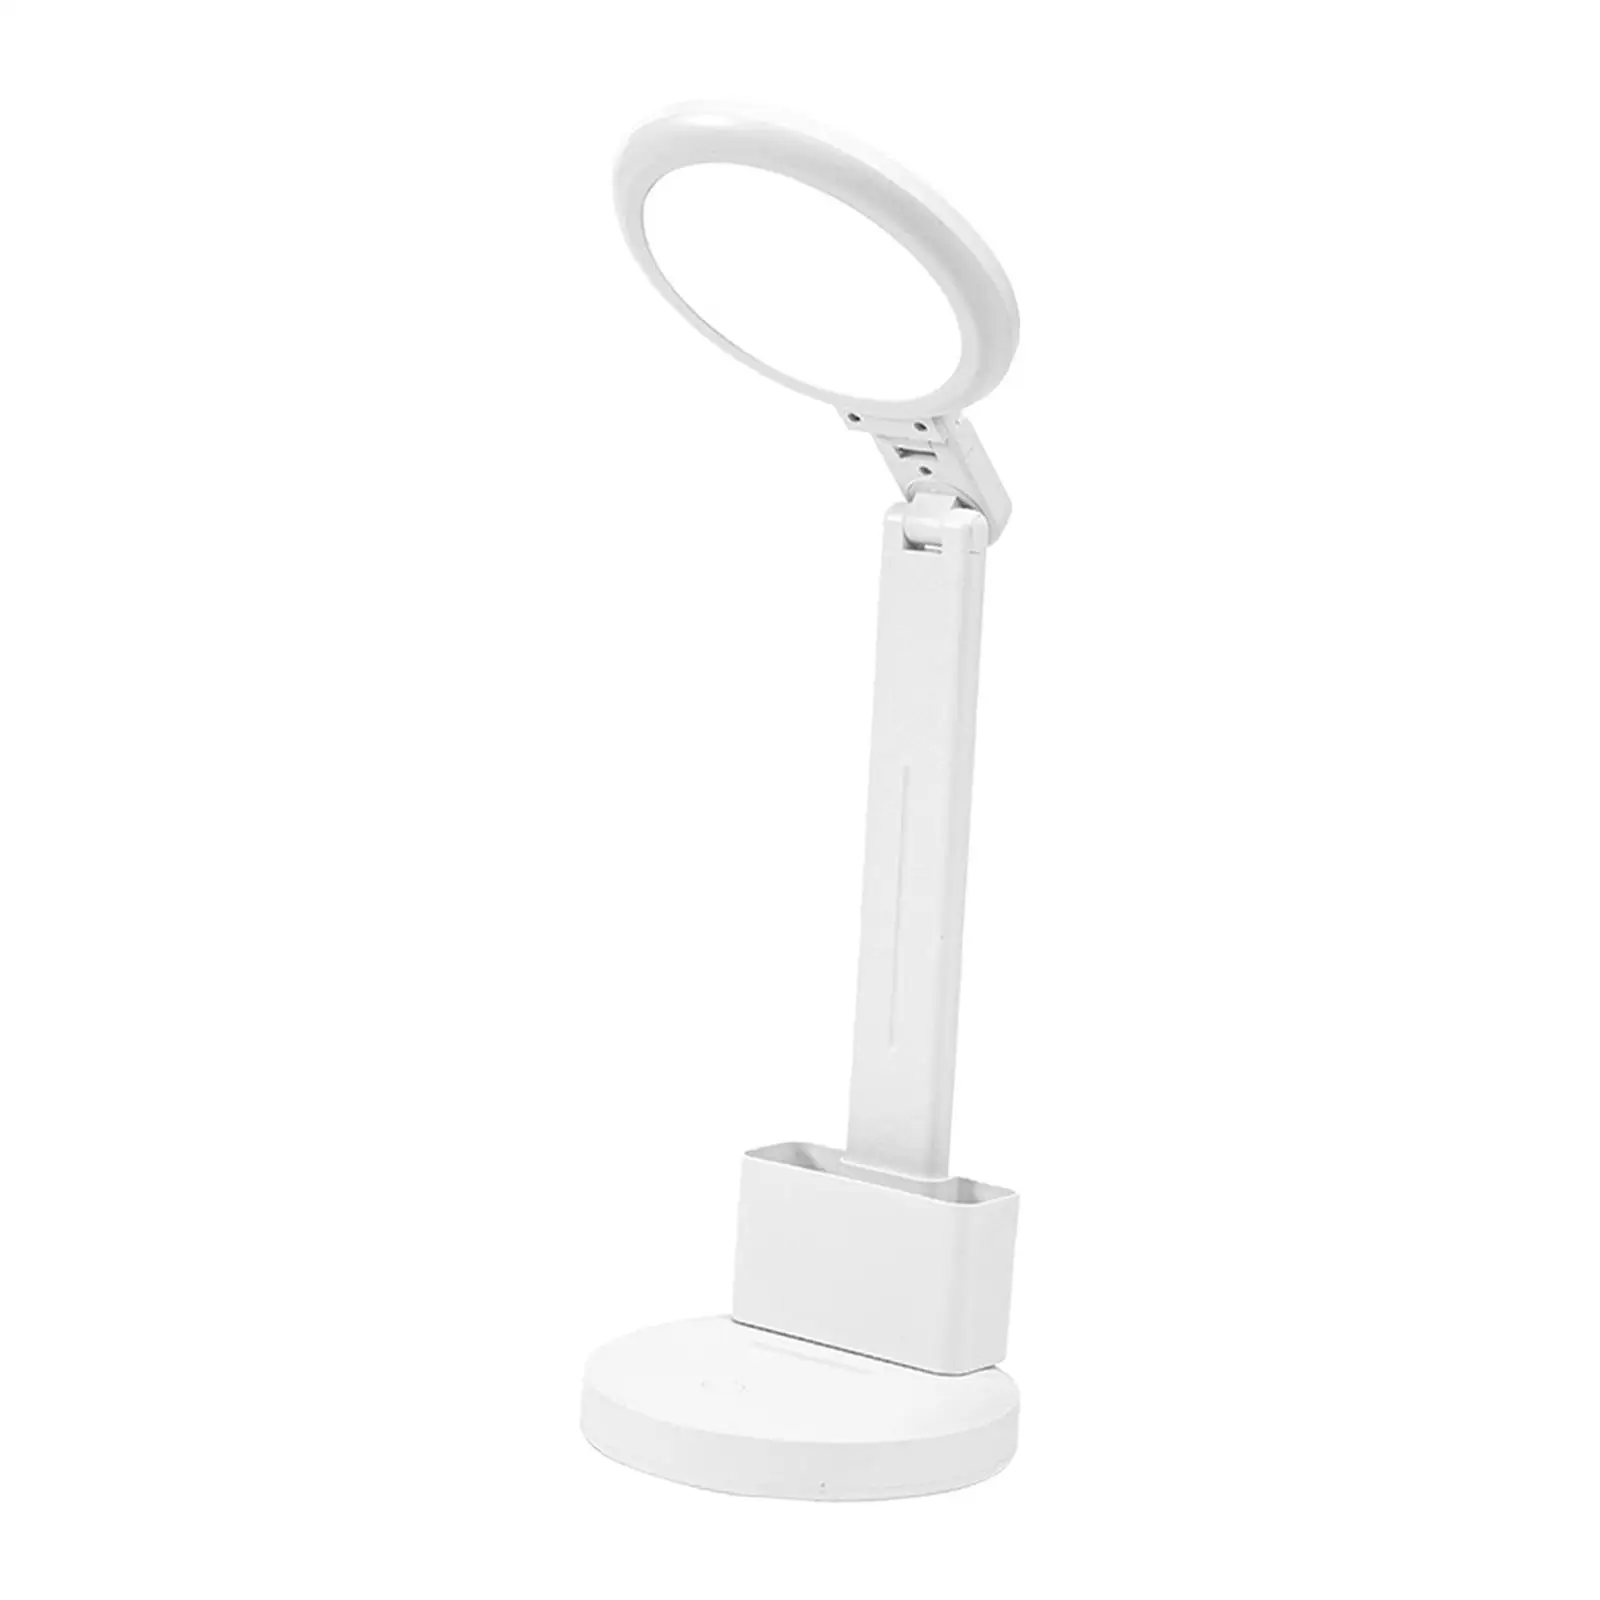 Portable LED Desk Lamp Bedside Reading Lamp Eye Protection NightStand Lamp Adjustable for Study Office Bedroom Hotel Decor